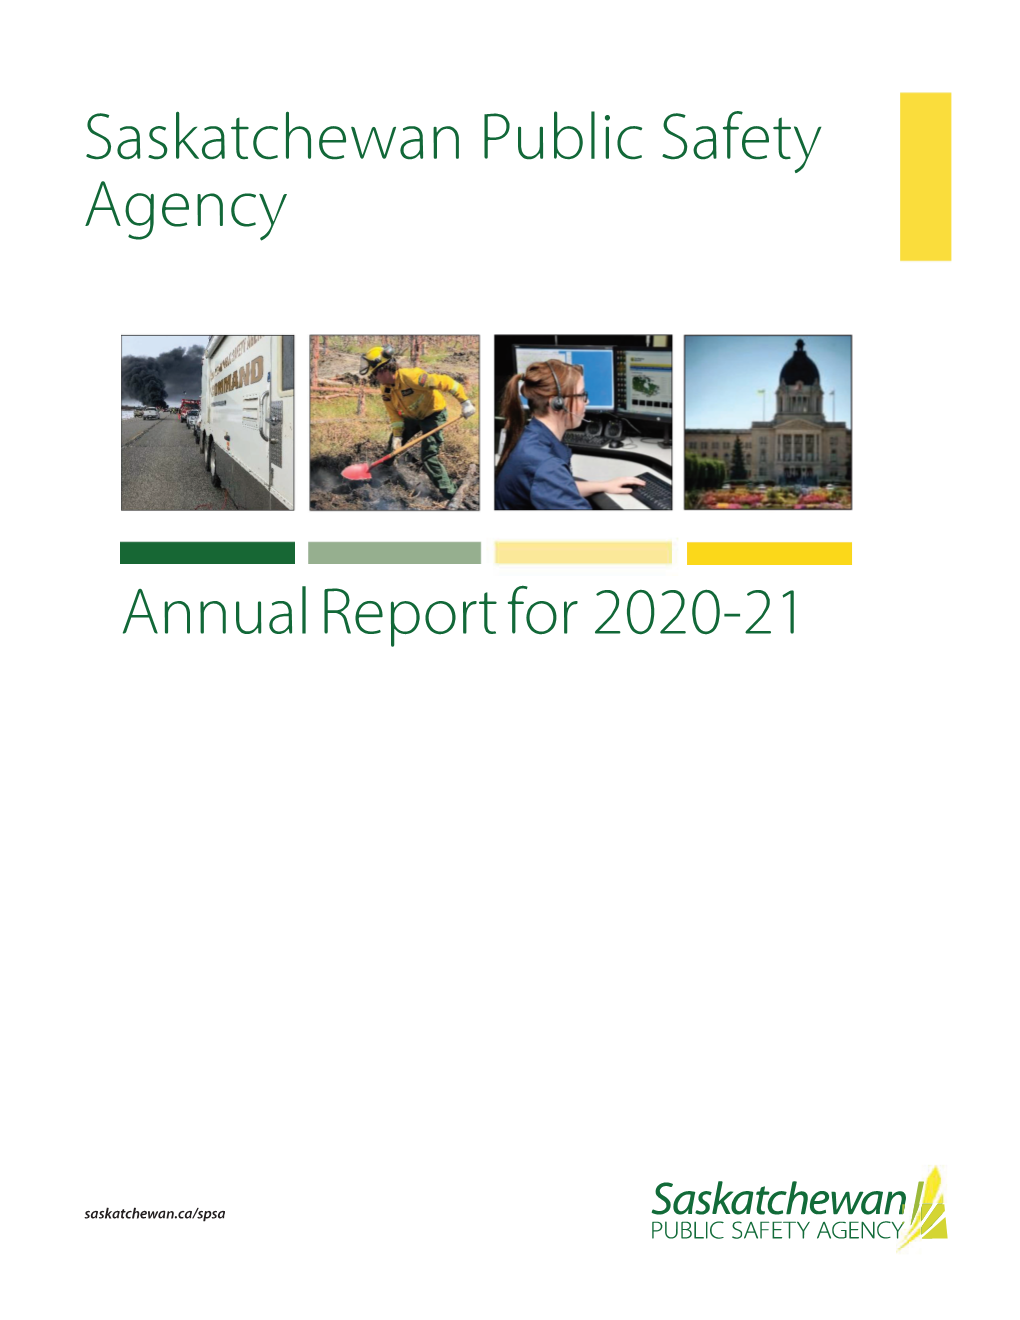 SPSA Annual Report 2020-21